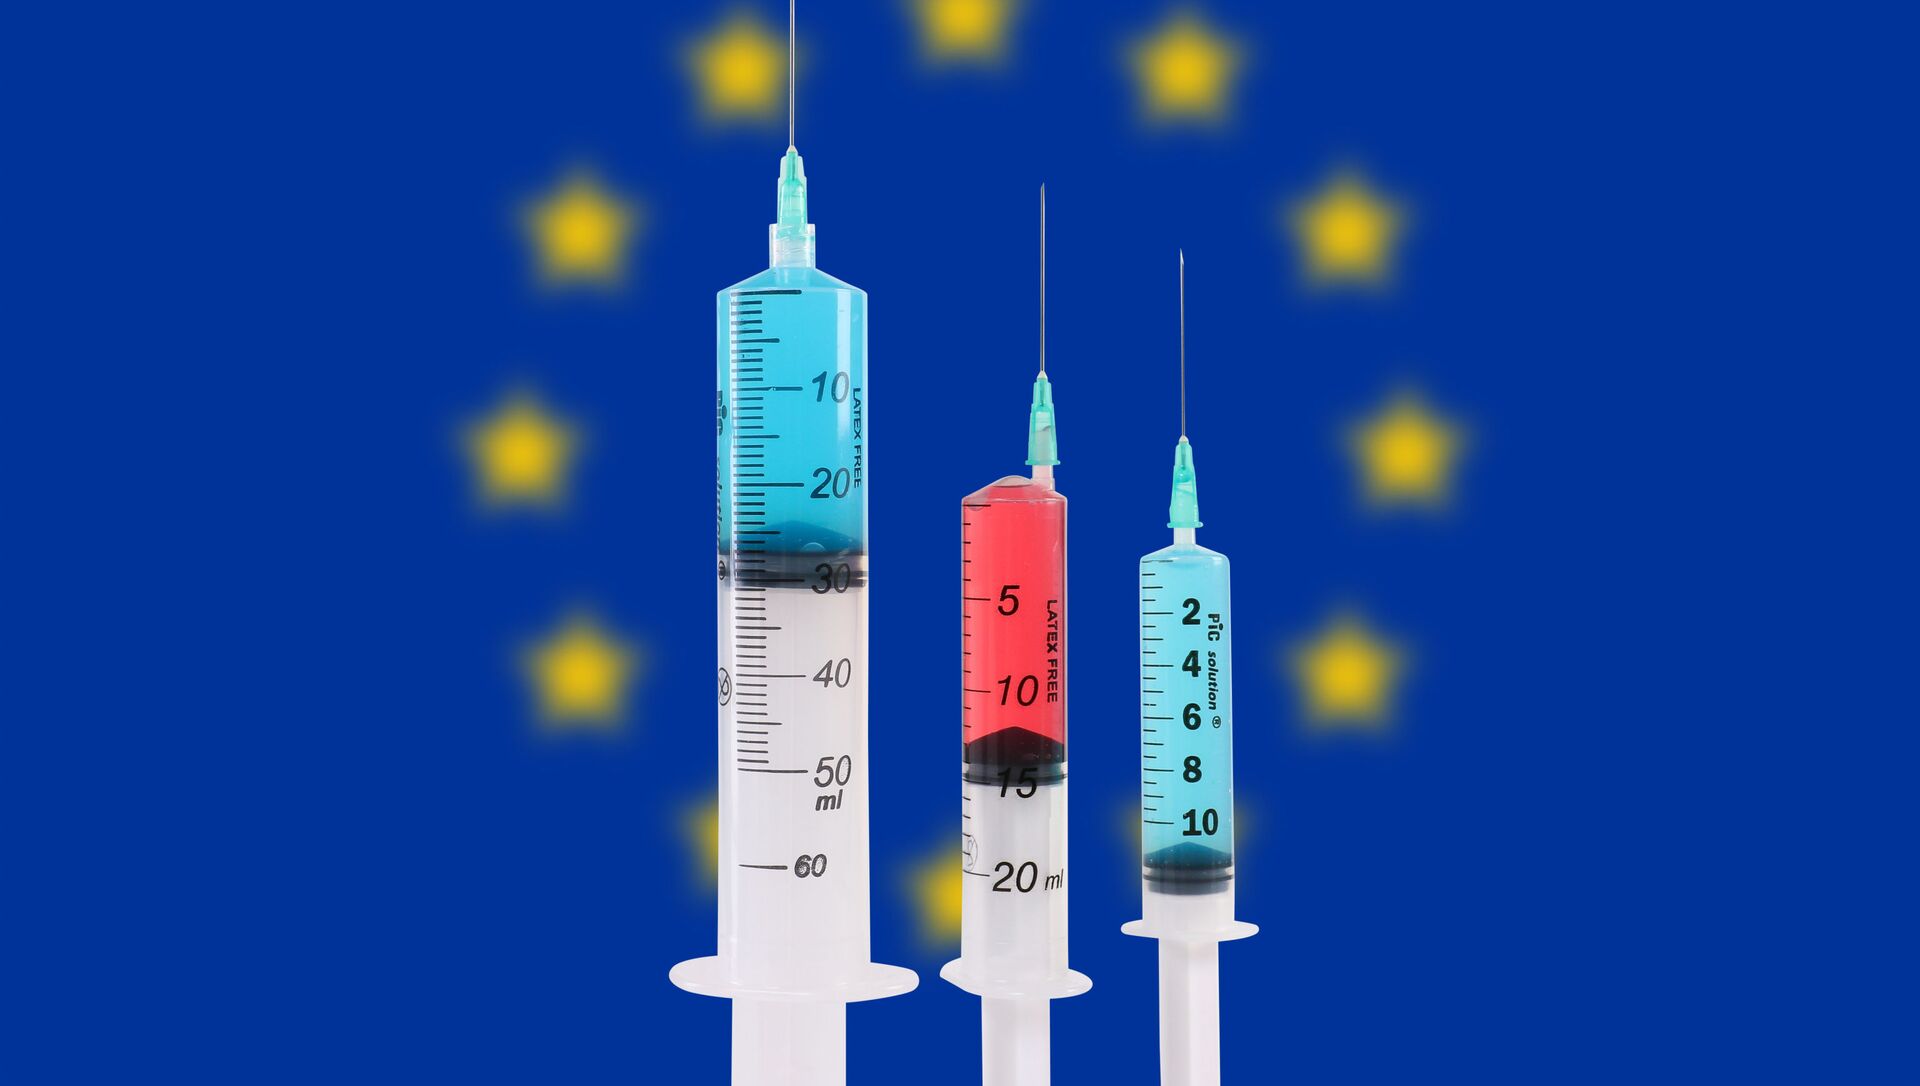 Campagne de vaccination en Europe (image d'illustration) - Sputnik Afrique, 1920, 13.03.2021